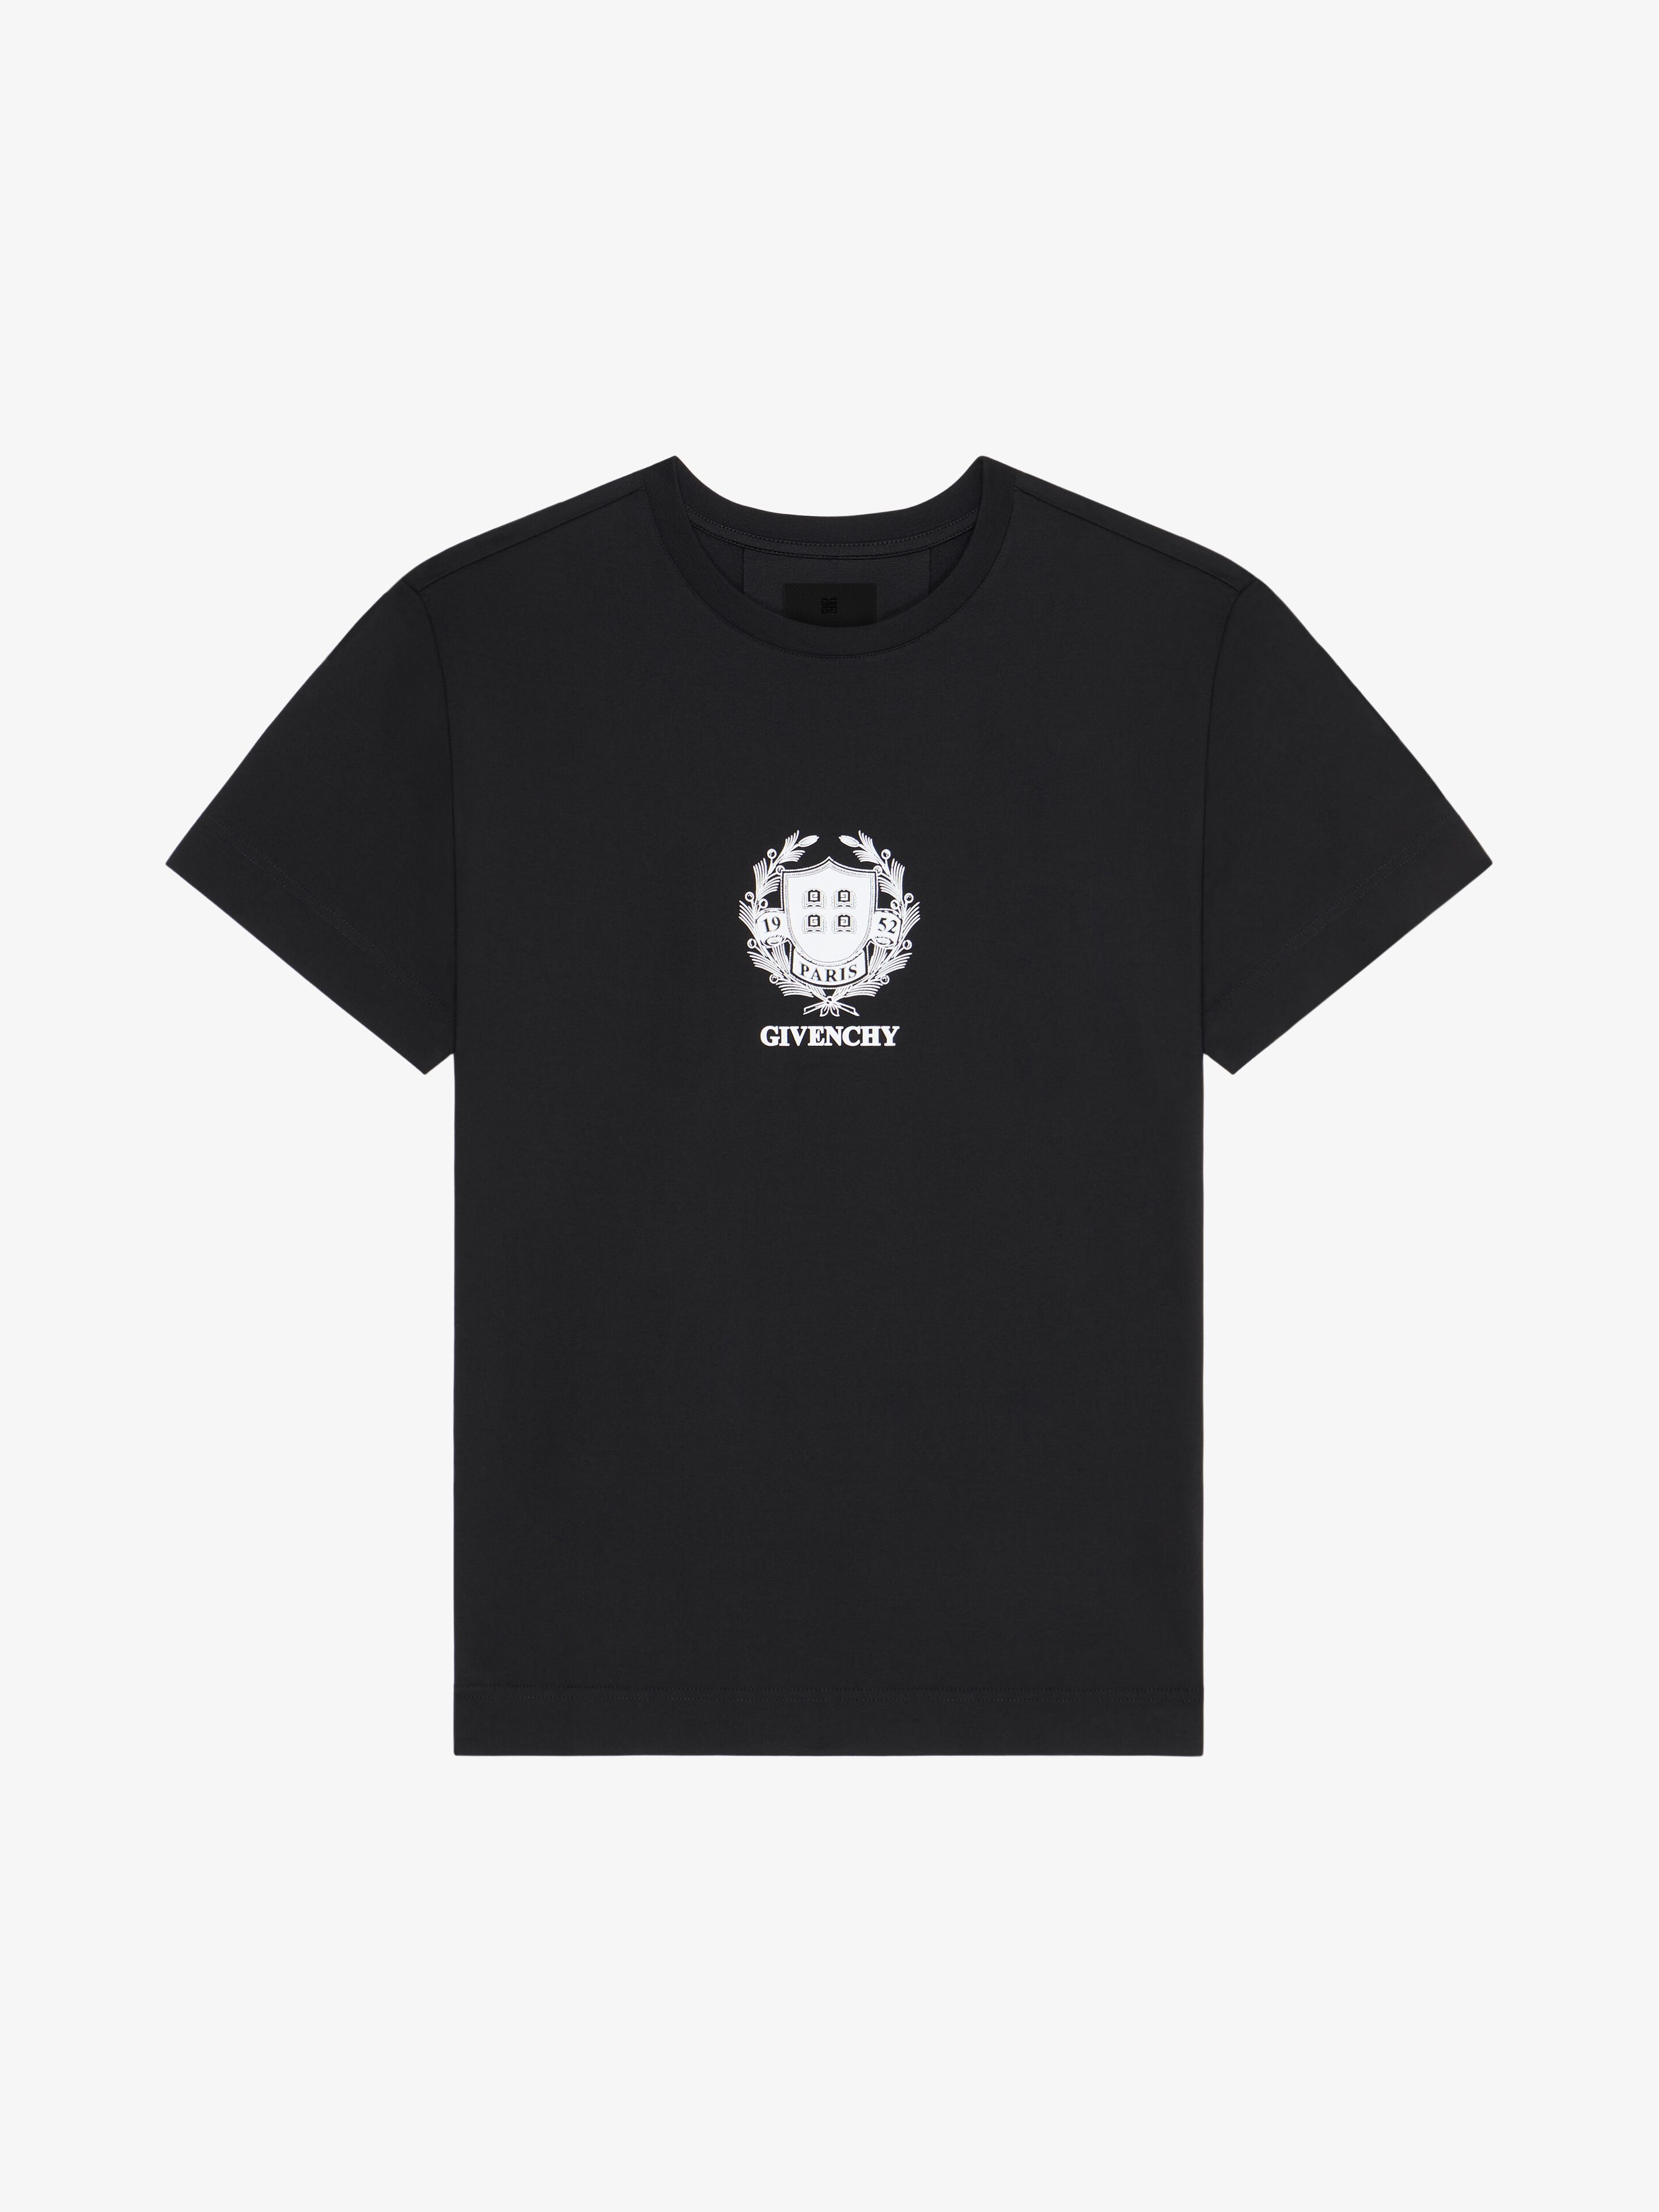 Givenchy Black Boxy-Fit T-Shirt